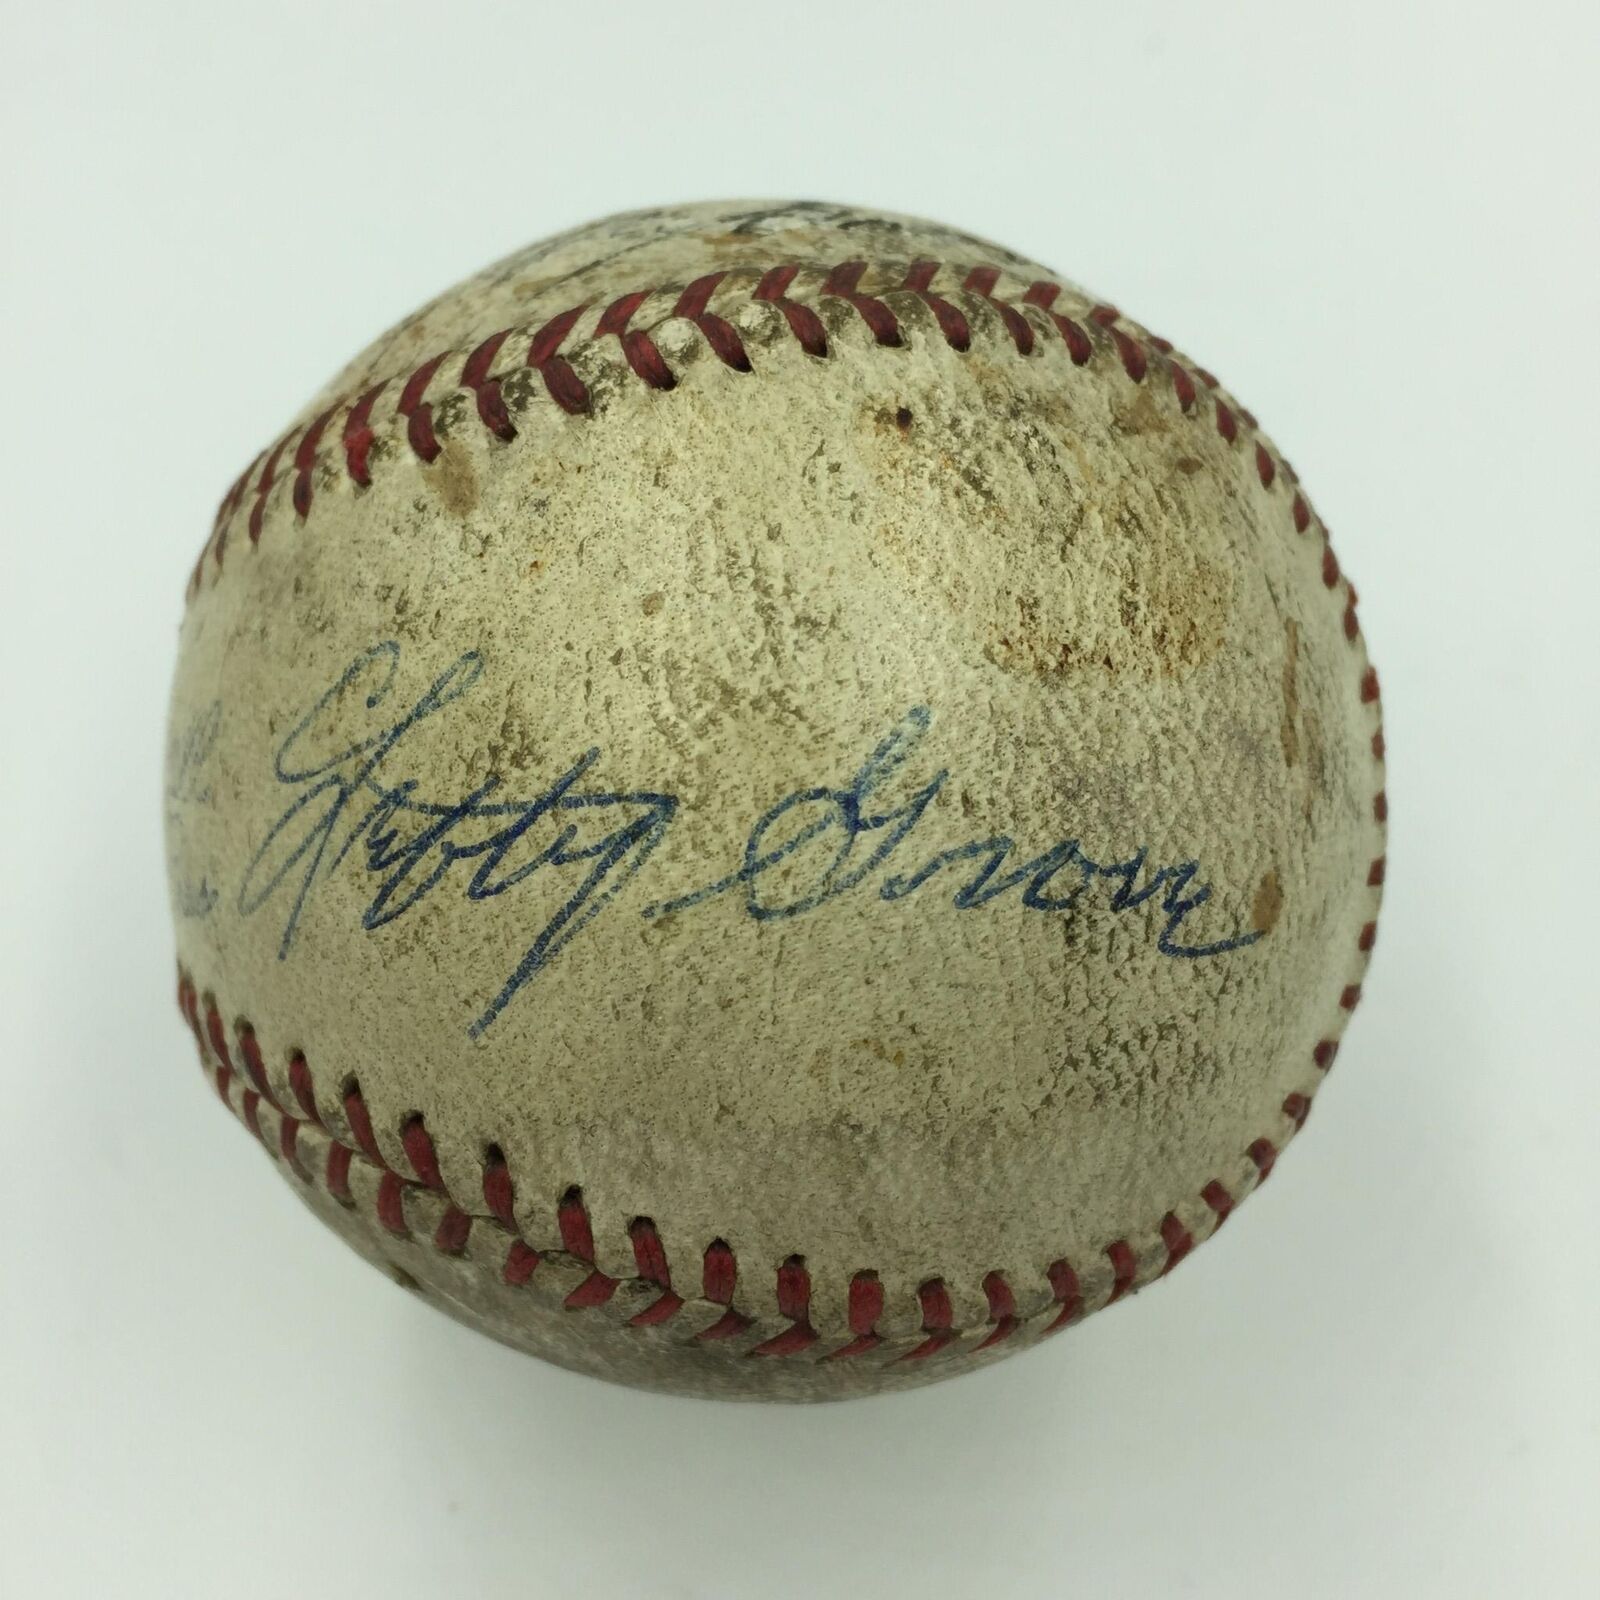 BERNIE WILLIAMS Signed Autographed Baseball Ball Yankees MLB Ball JSA COA